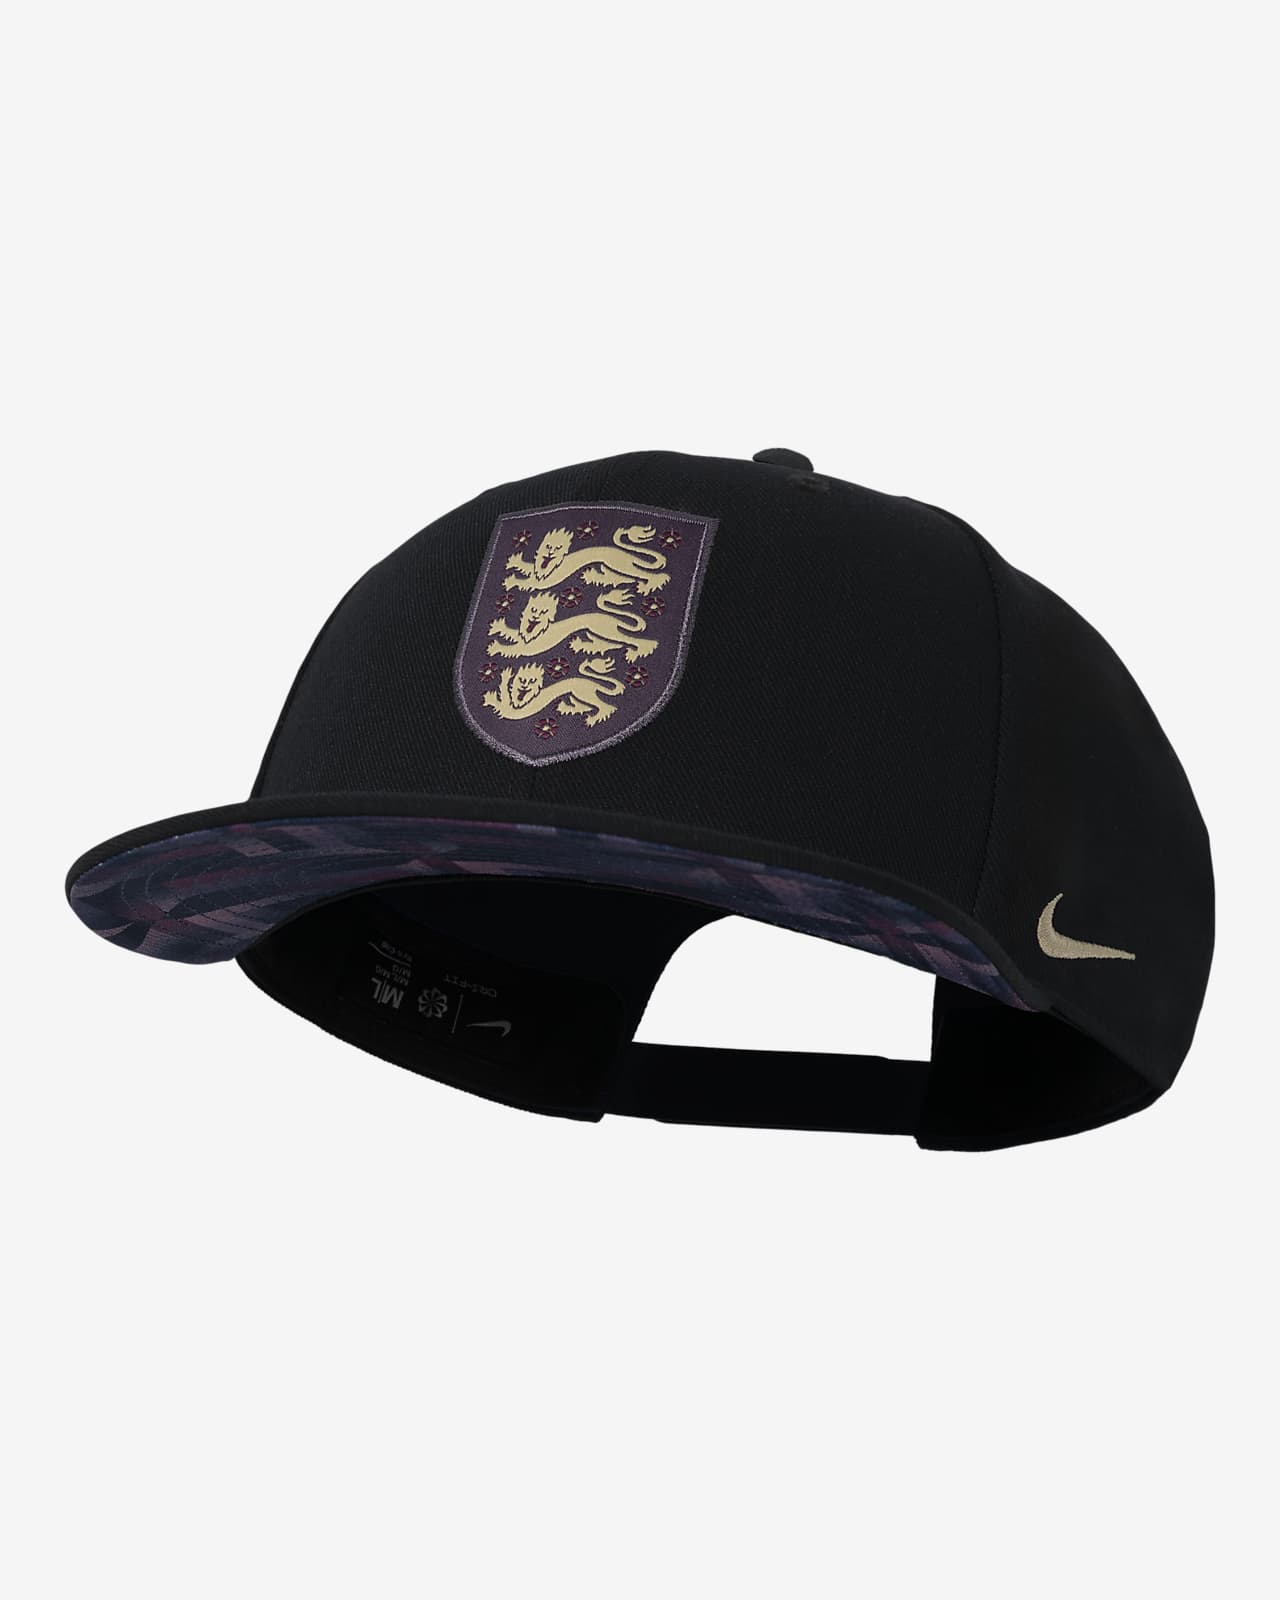 England Pro Nike Soccer Cap